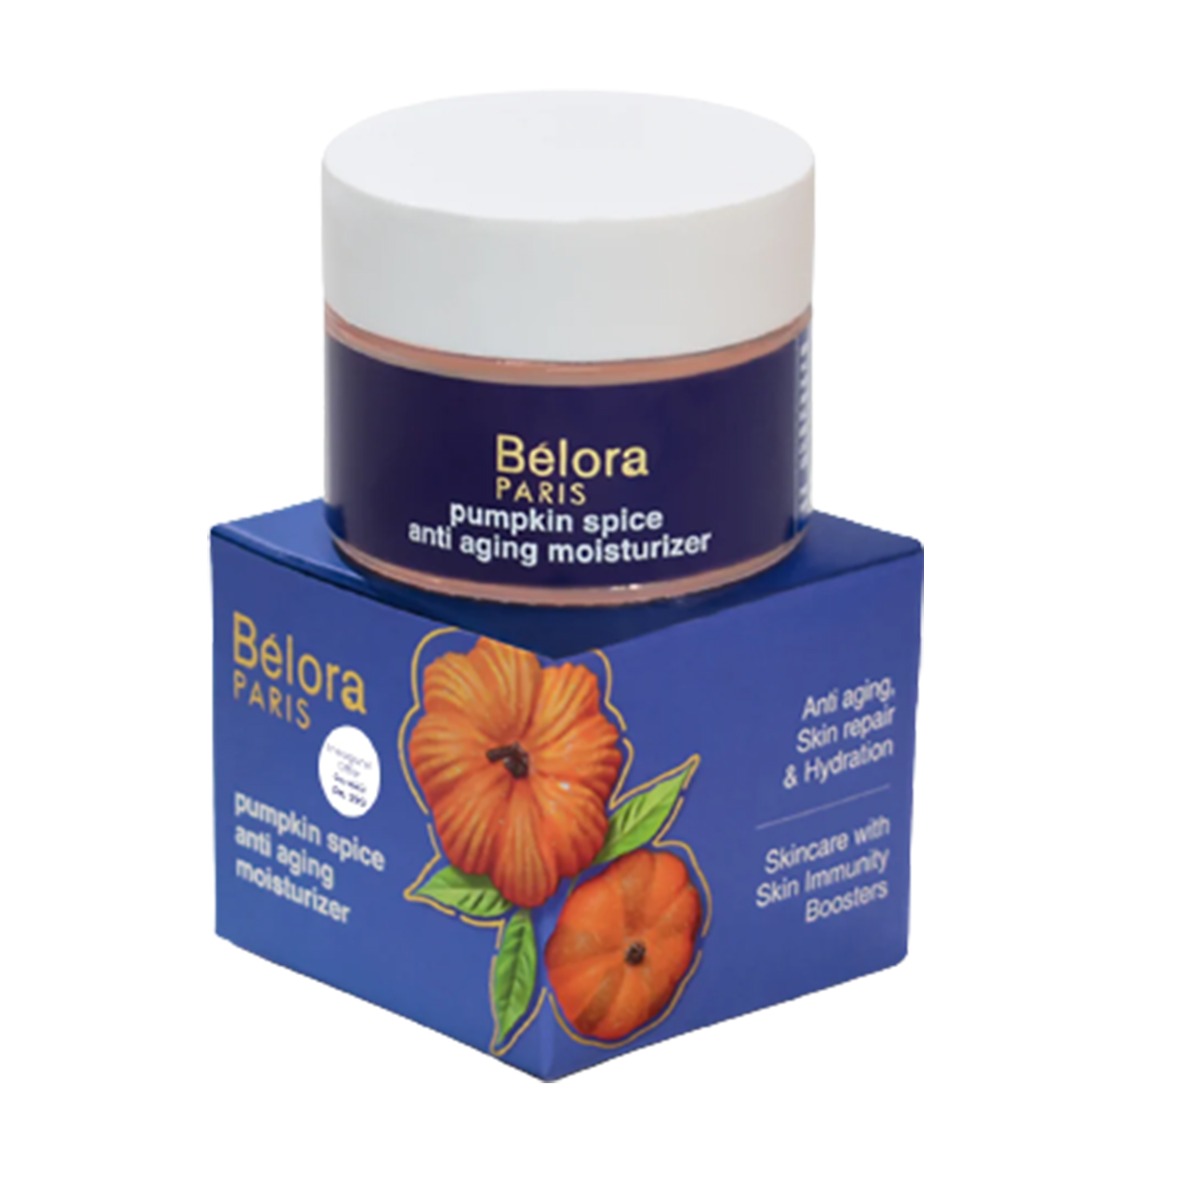 Belora Paris Pumpkin Spice Anti Aging Moisturizer, 50ml